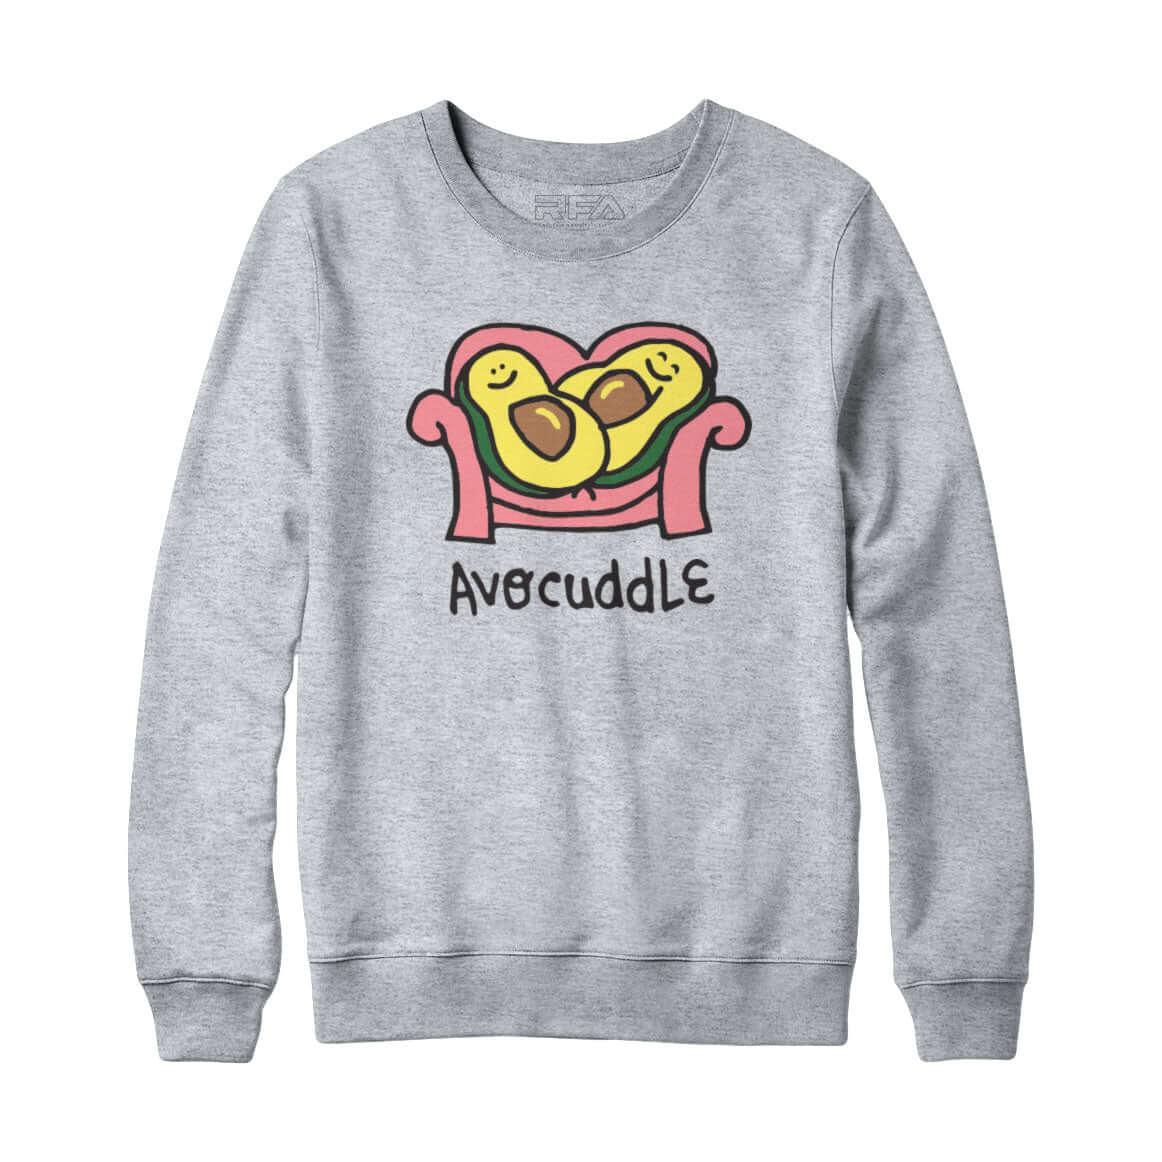 Avocuddle Cute Avocado Sweatshirt Hoodie - Rocket Factory Apparel